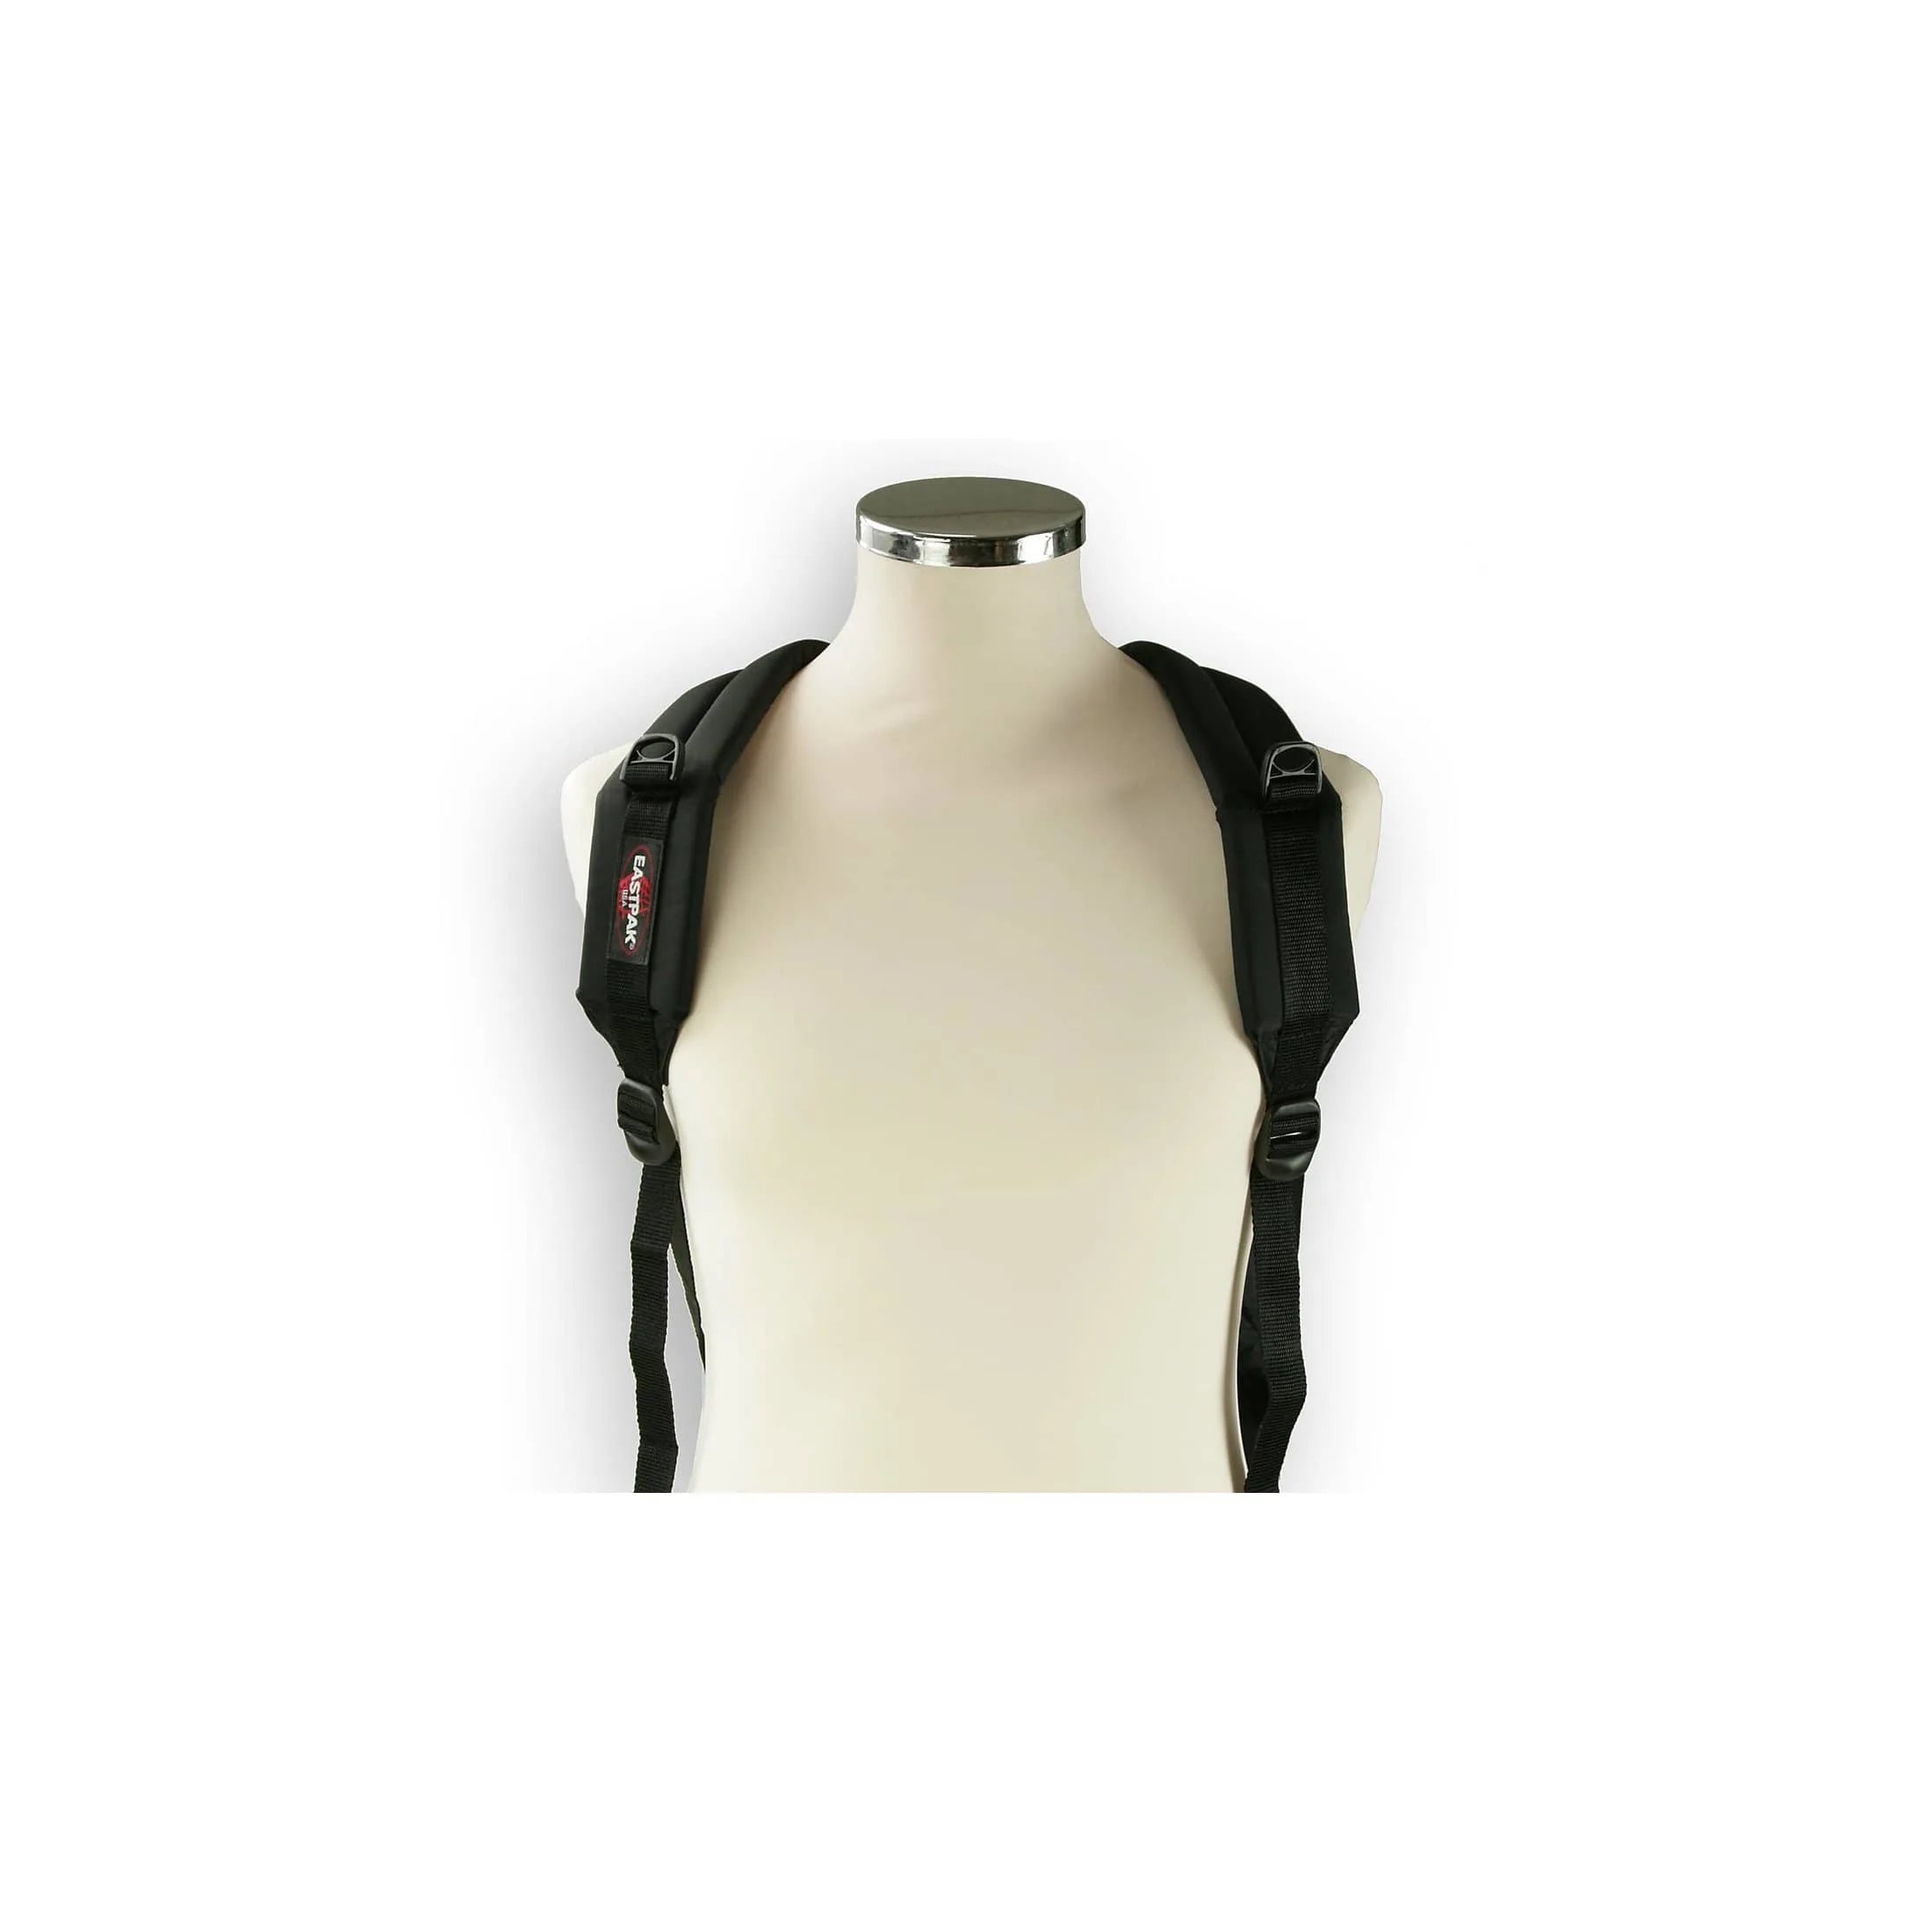 Eastpak Authentic Pinnacle leisure backpack 42 cm - Ultra Marine